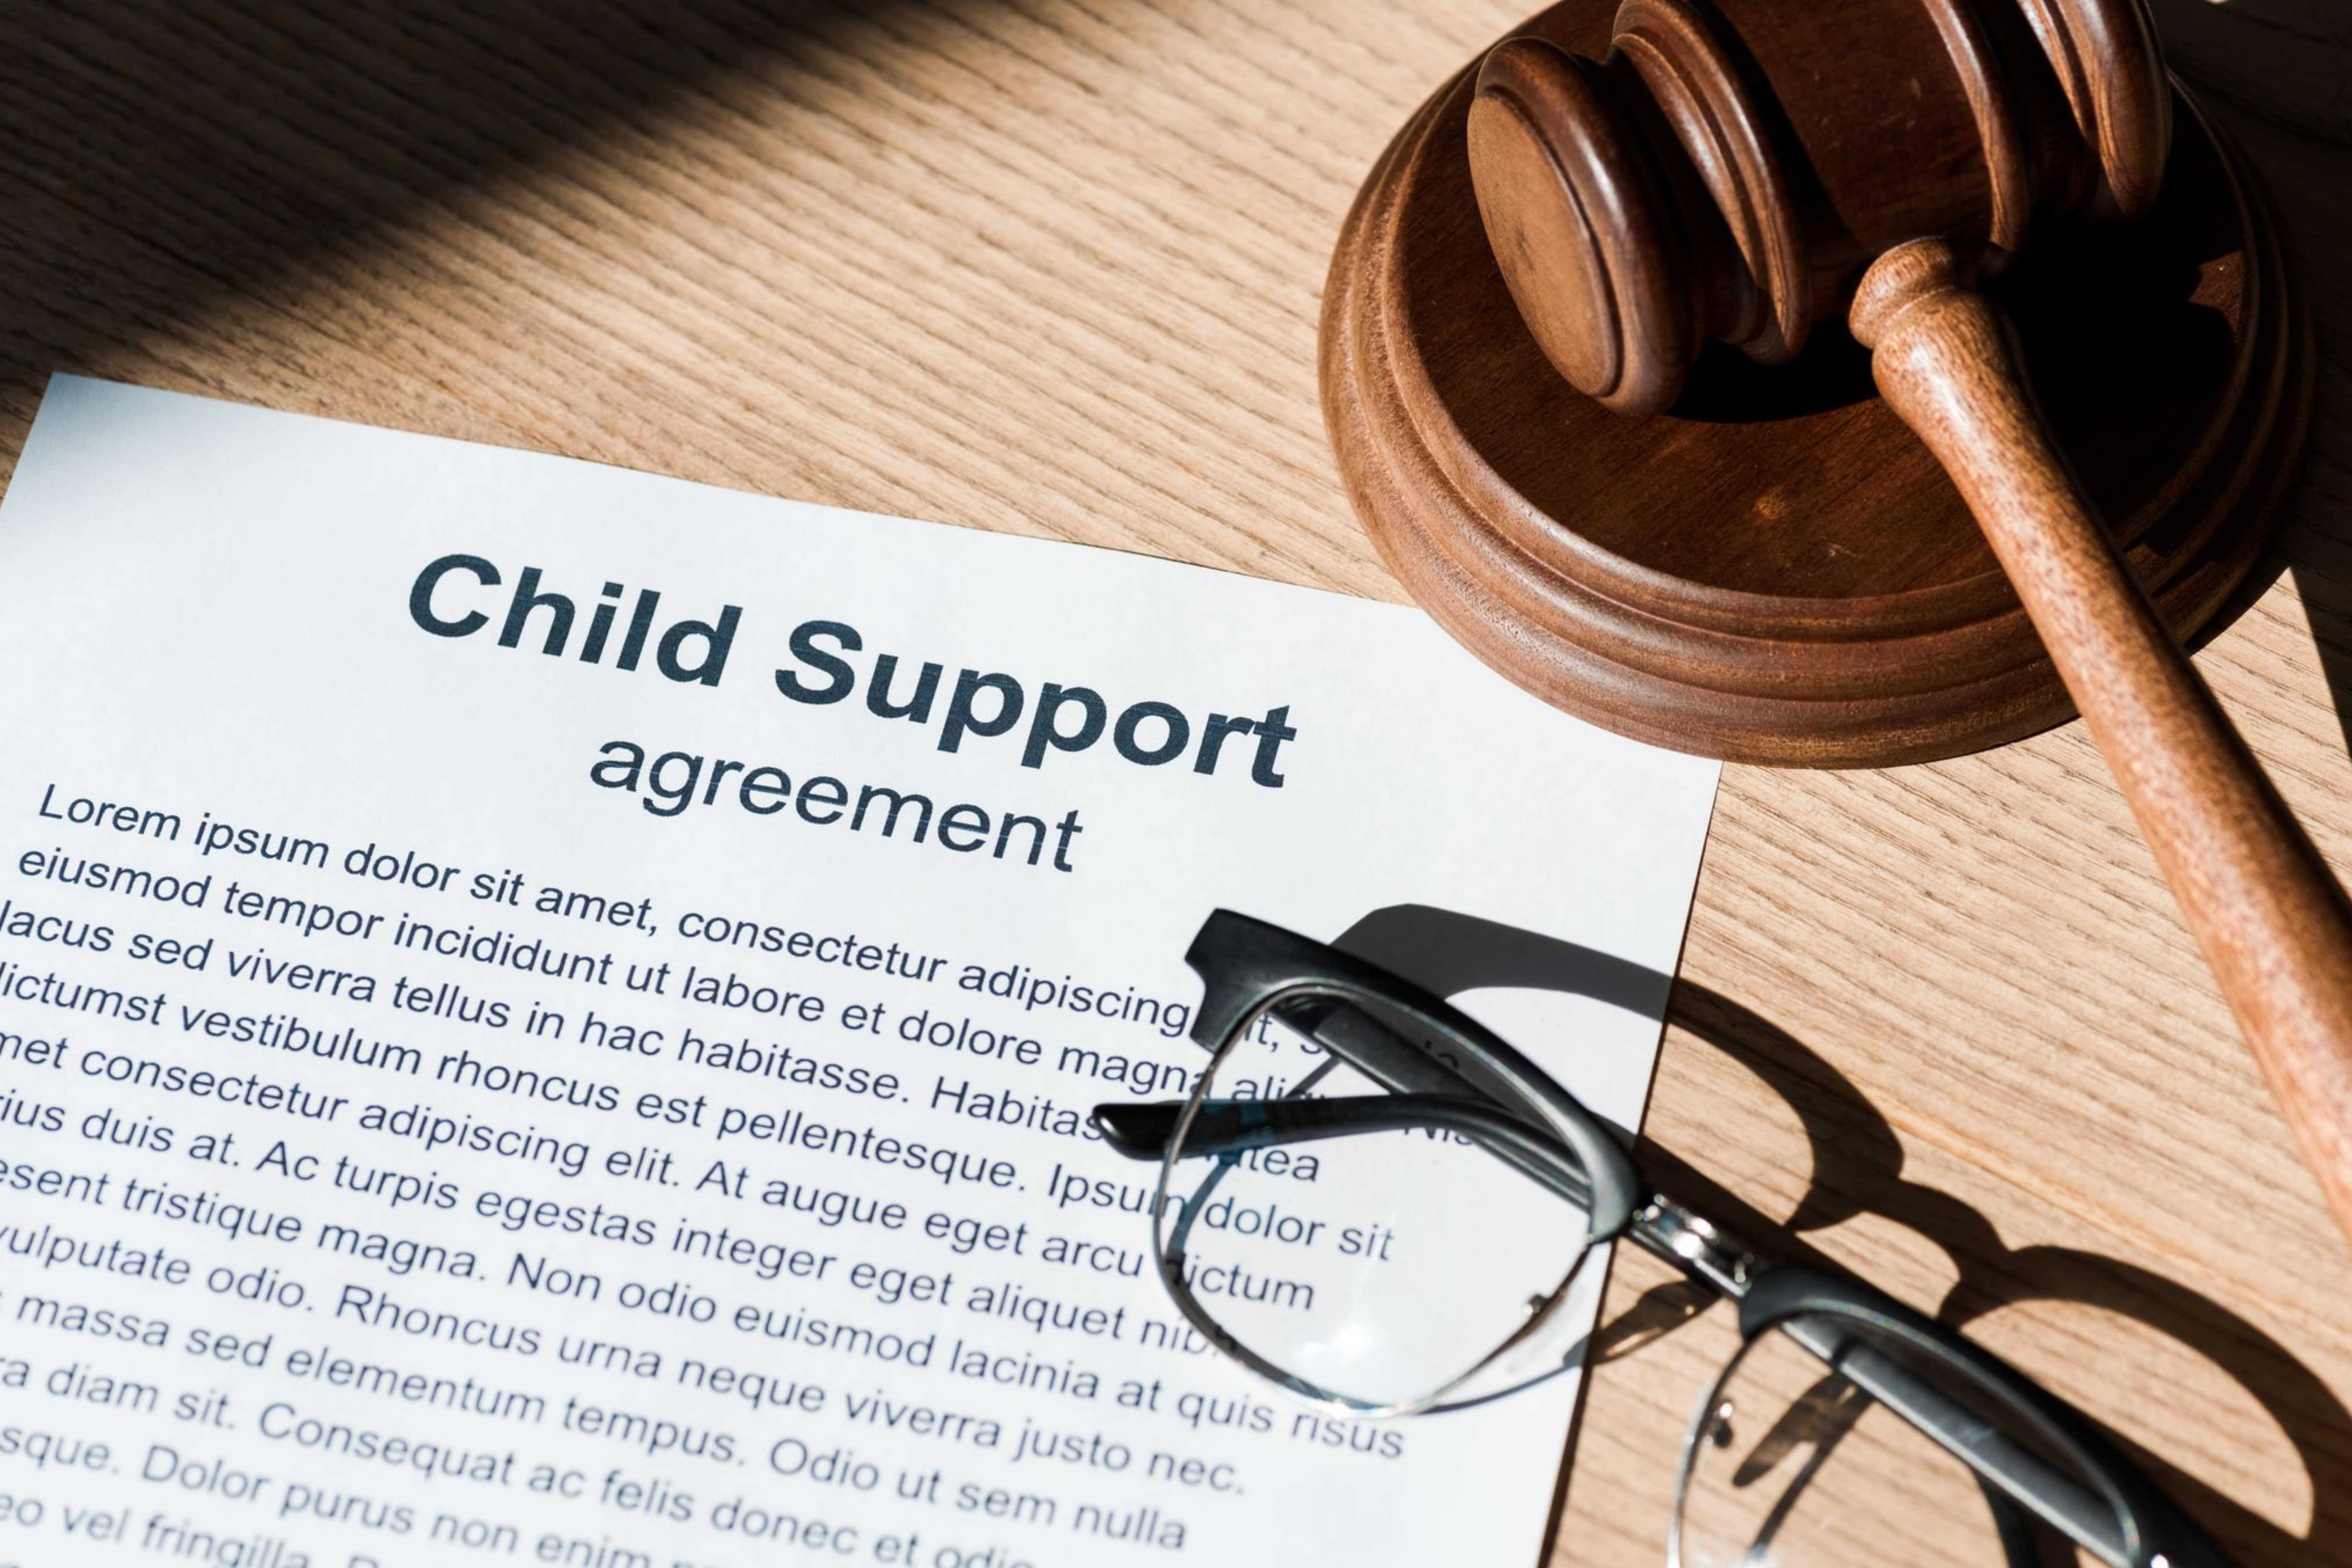 2. Child Support